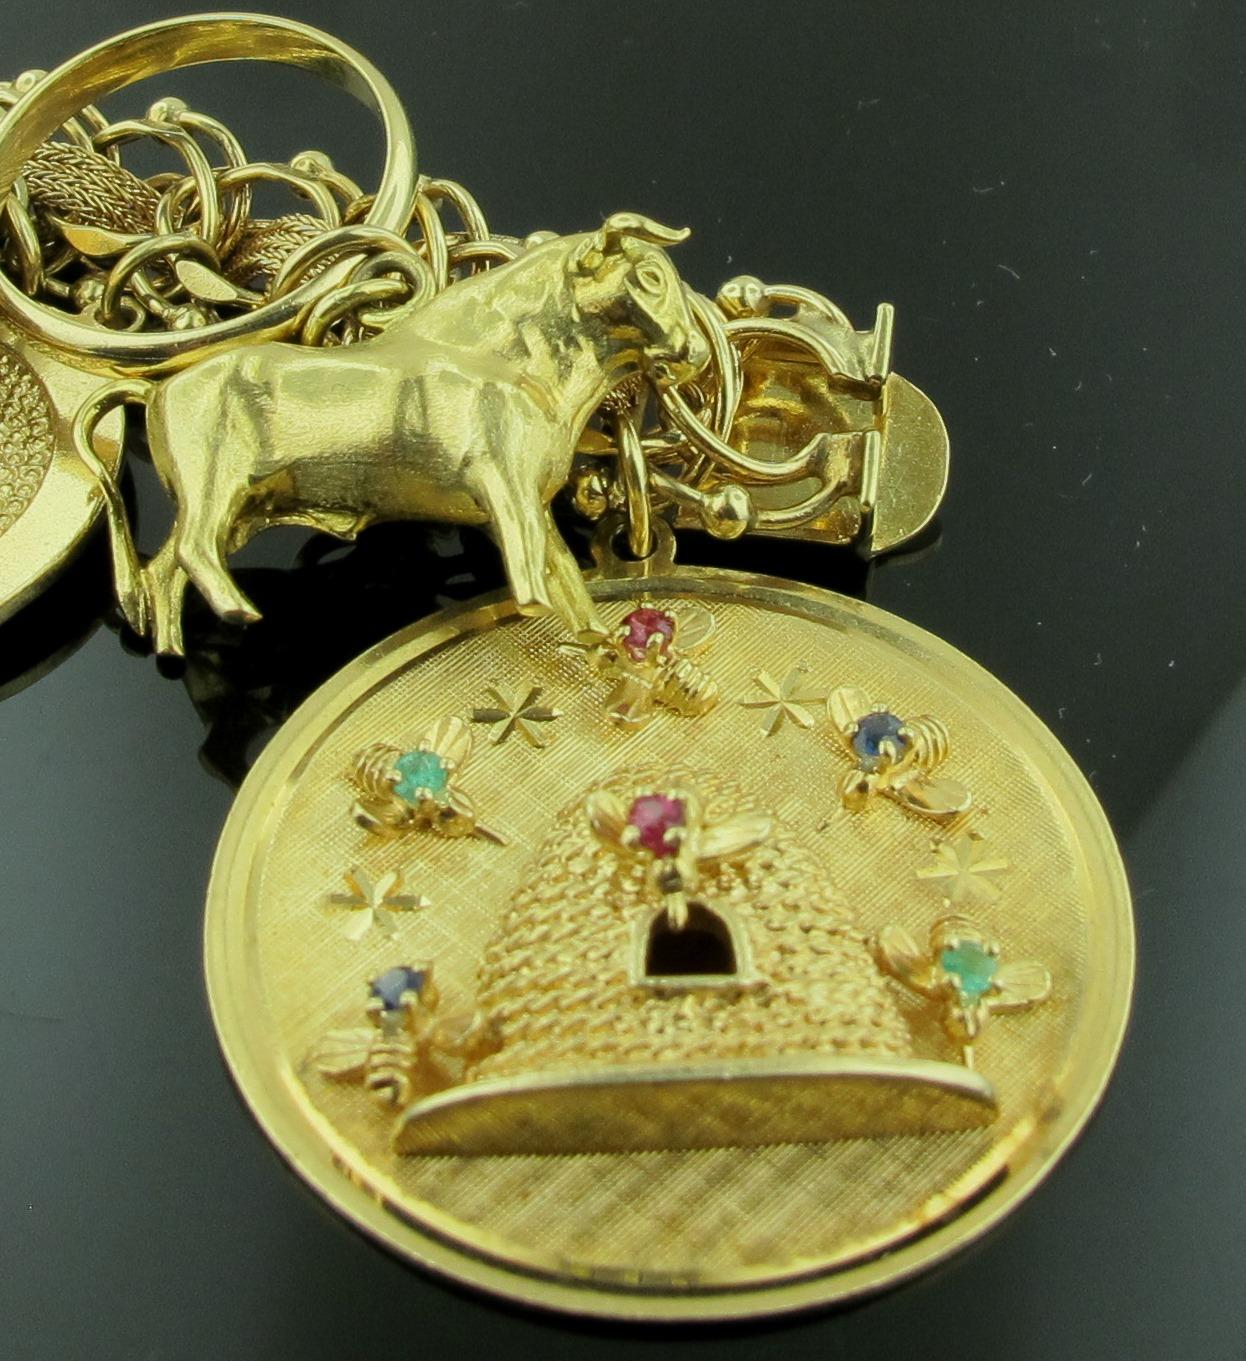 14 Karat Yellow Gold Charm Bracelet with 19 Charms 2